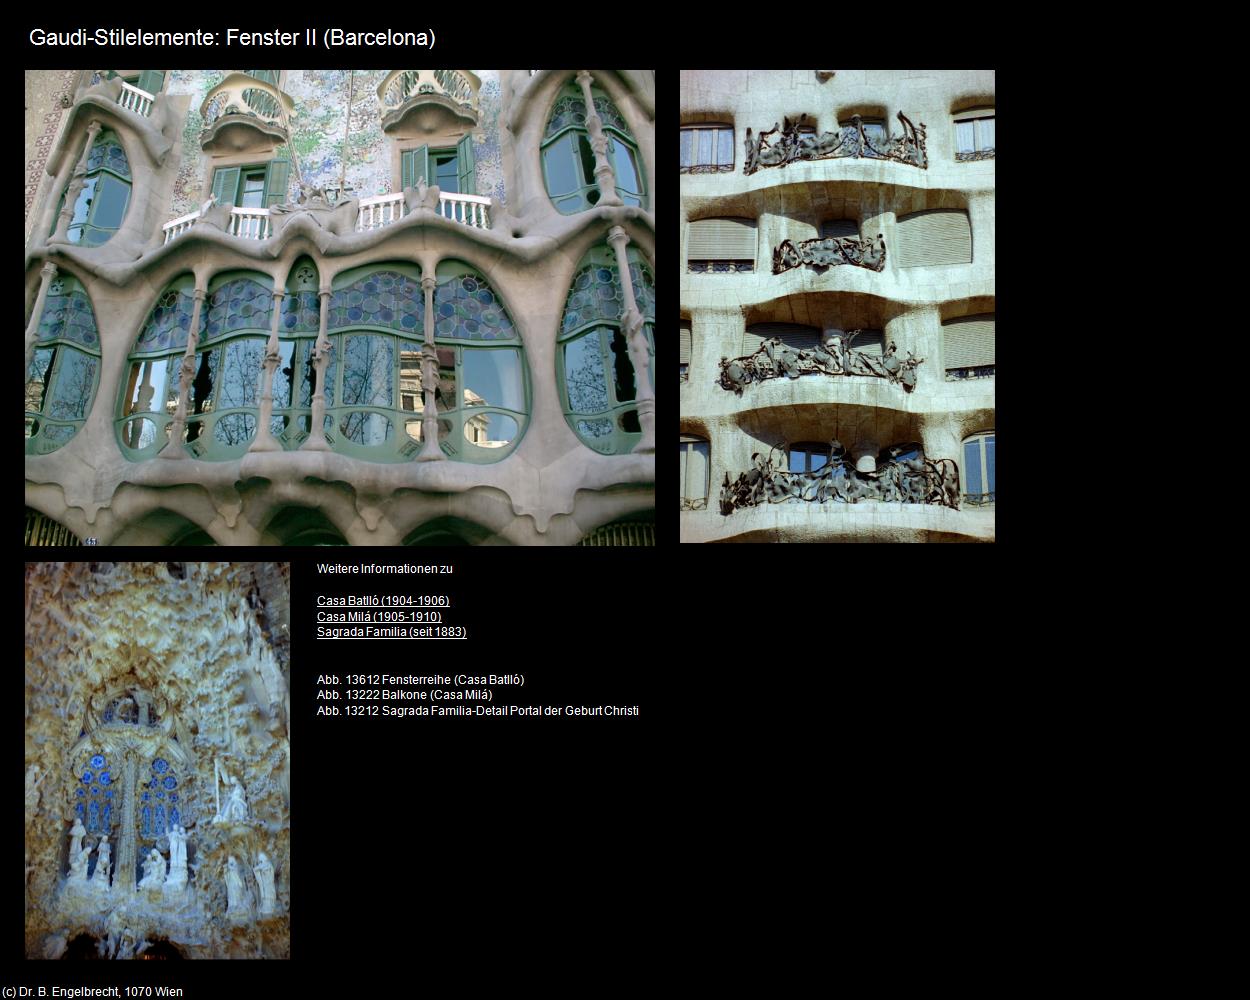 Gaudi-Stilelemente: Fenster II  (Barcelona) in KATALONIEN(c)B.Engelbrecht